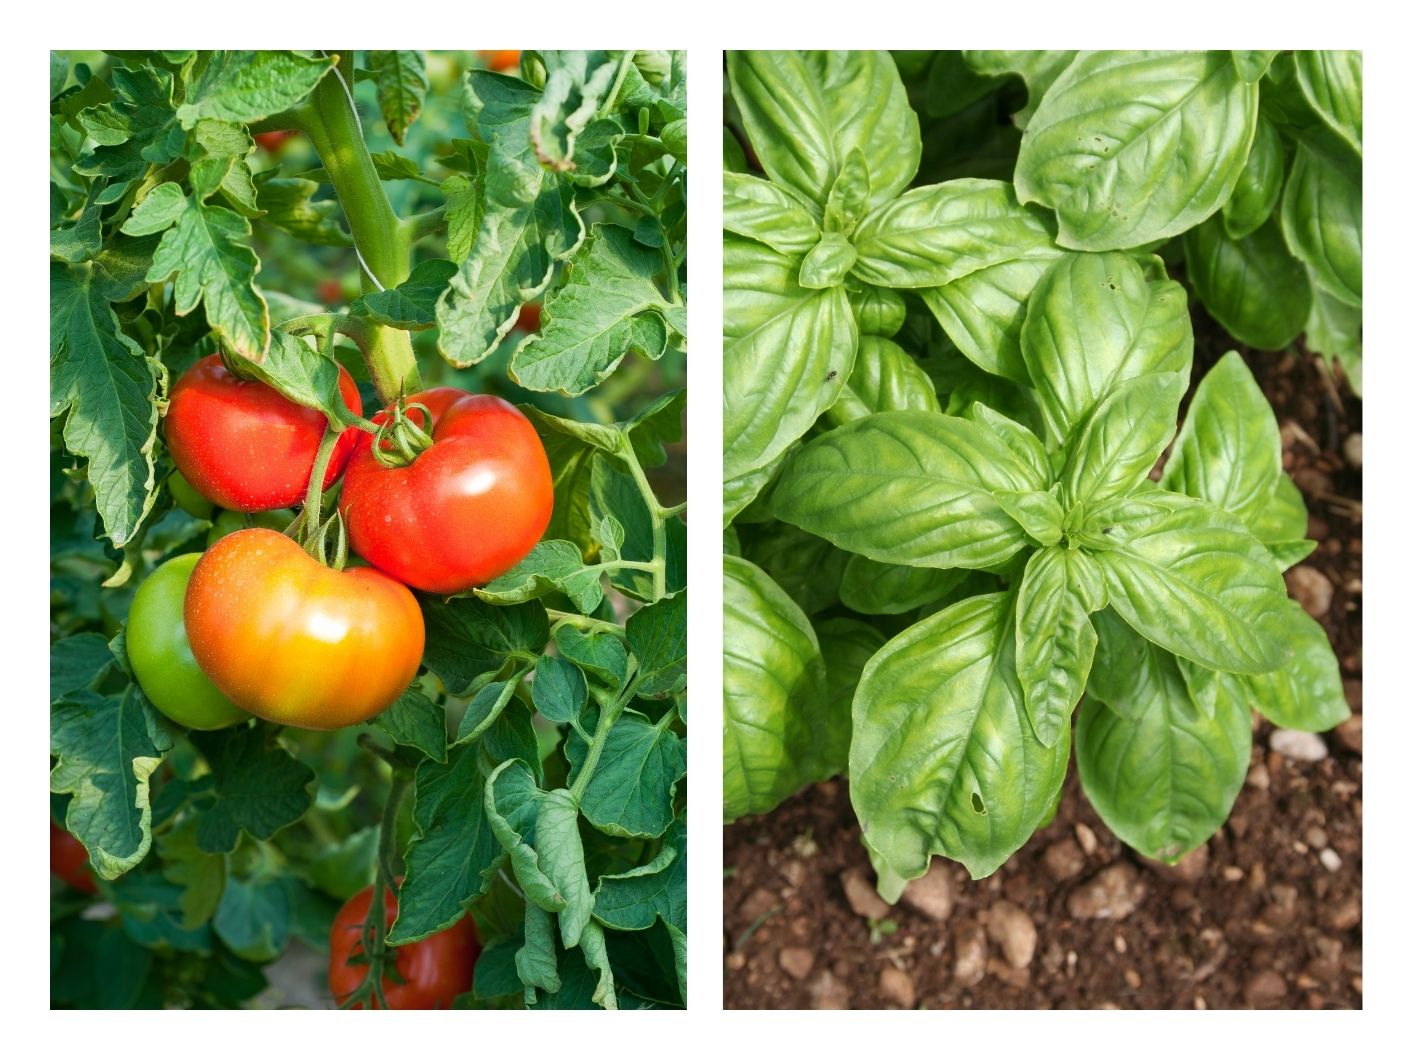 Tomat-og-basilikum-er-gode-naboplanter